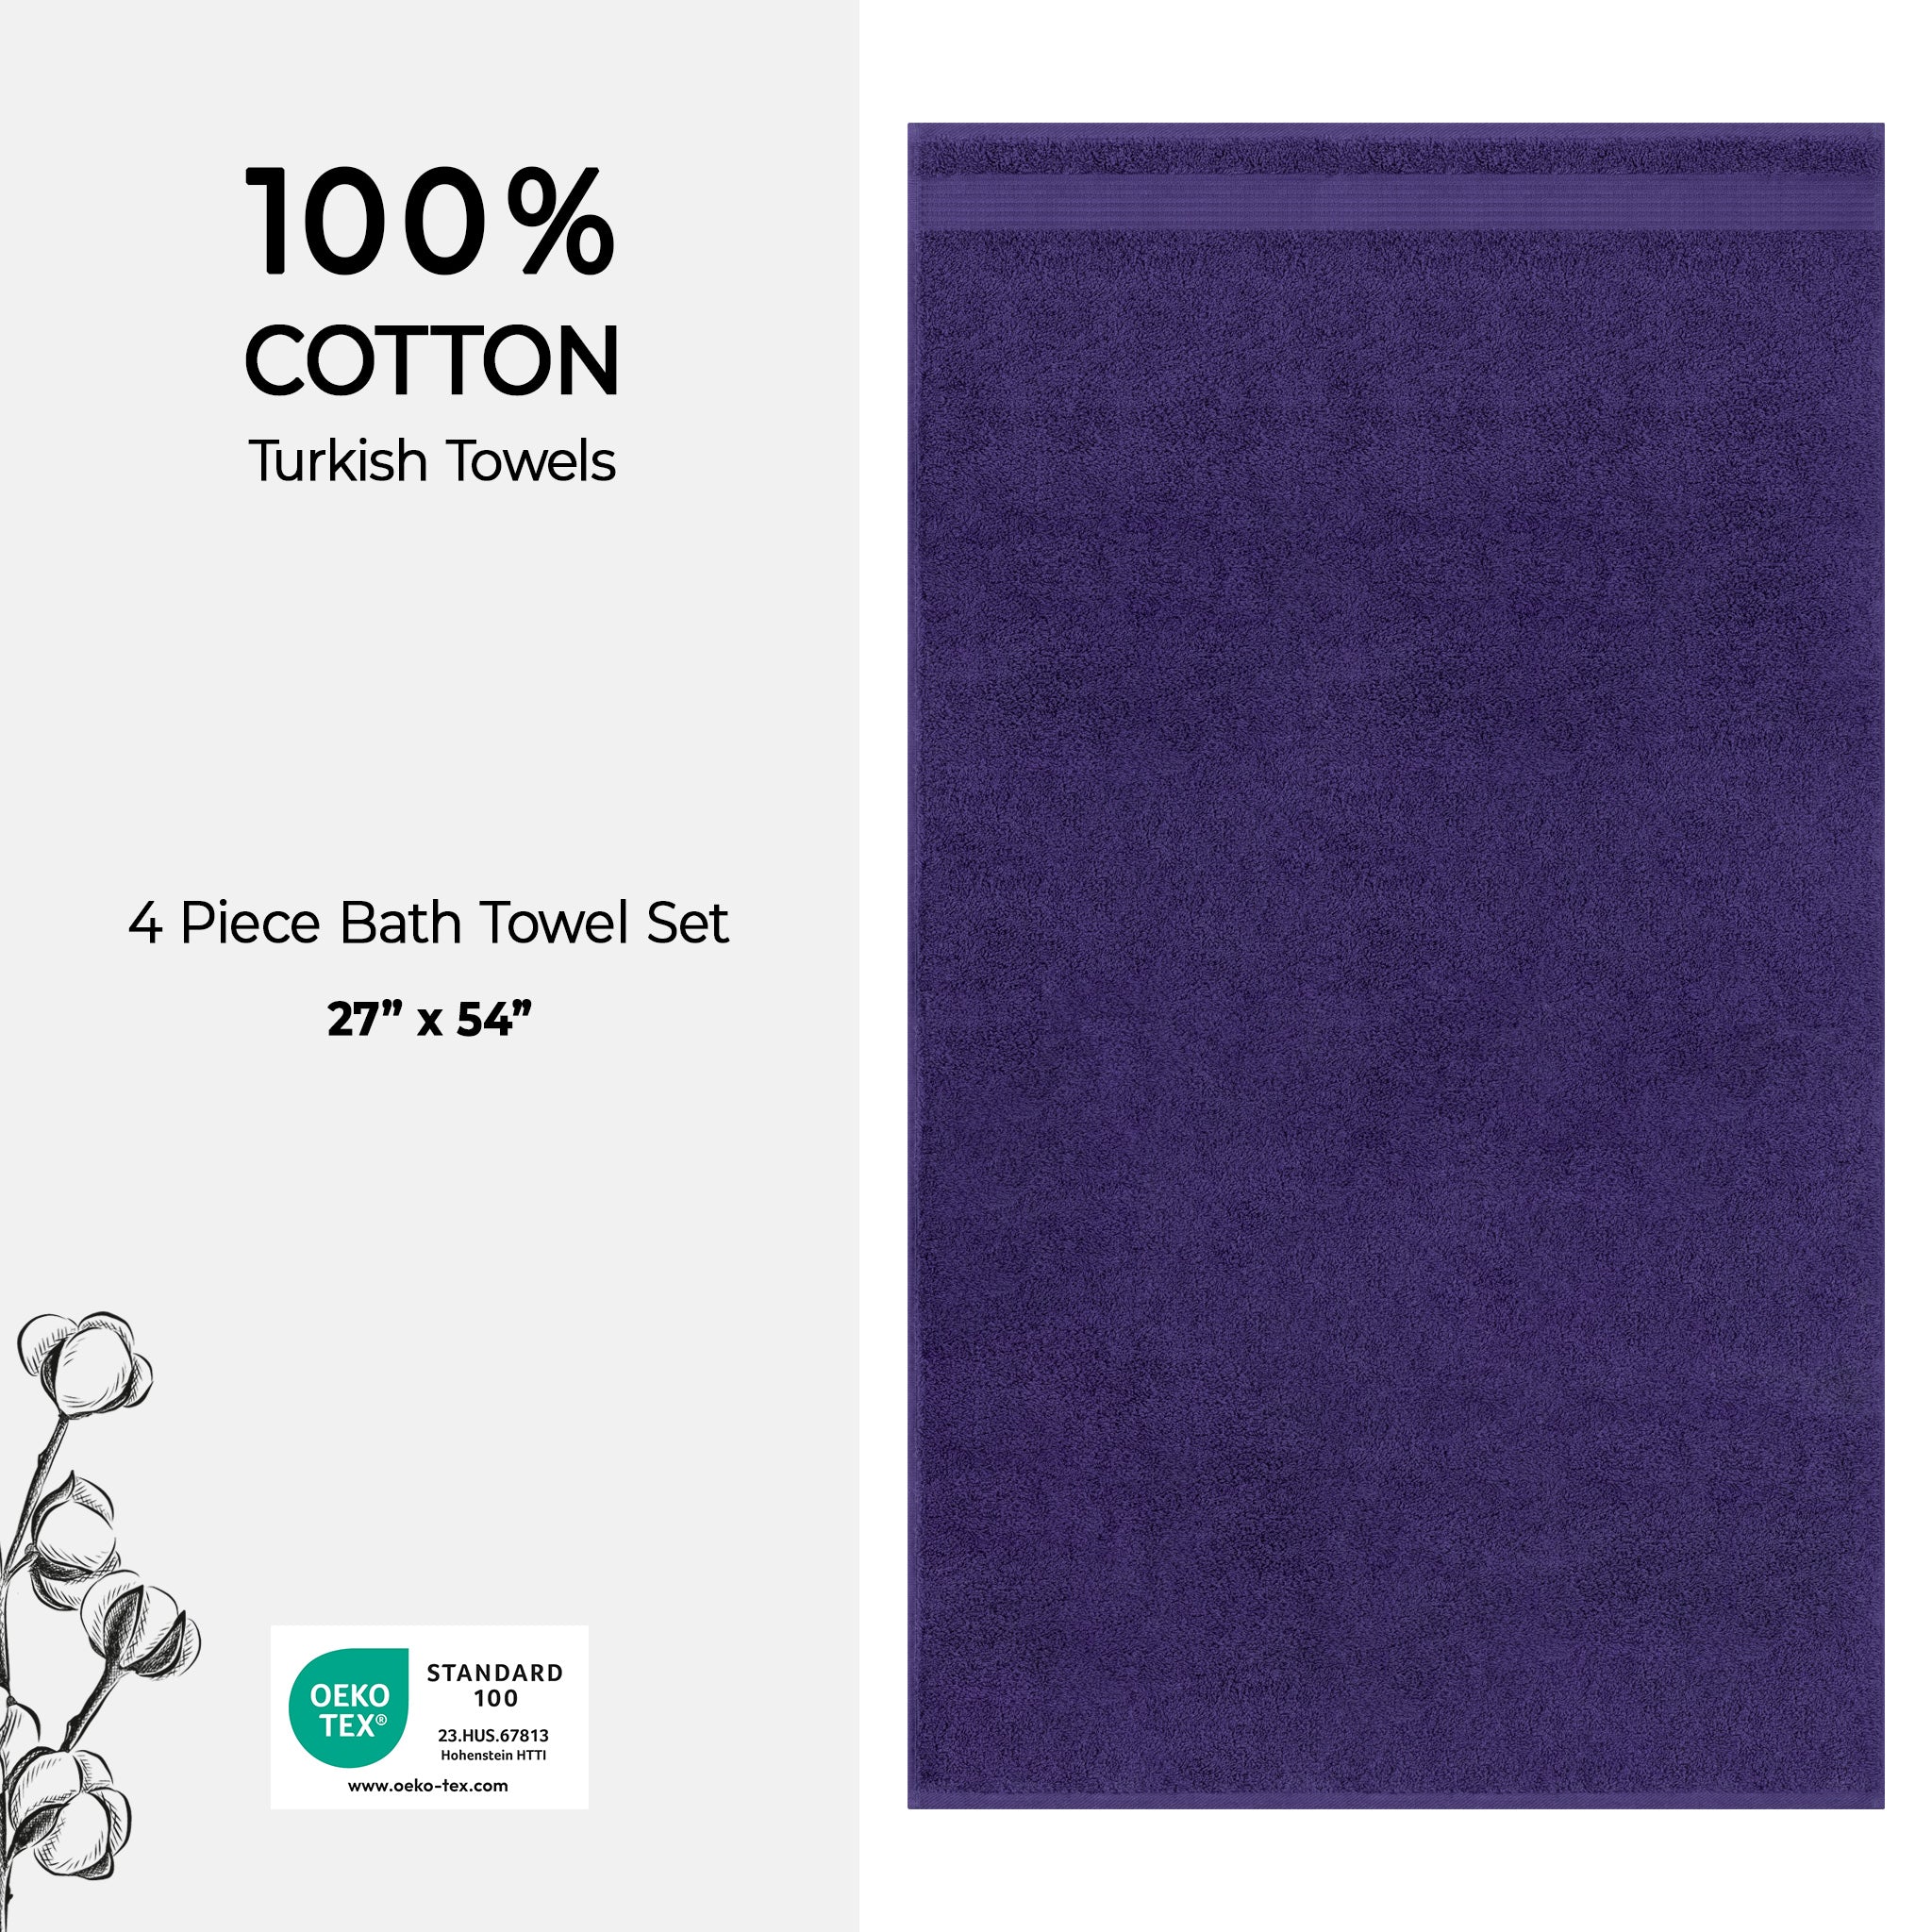 American Soft Linen Bekos 100% Cotton Turkish Towels, 4 Piece Bath Towel Set -purple-04